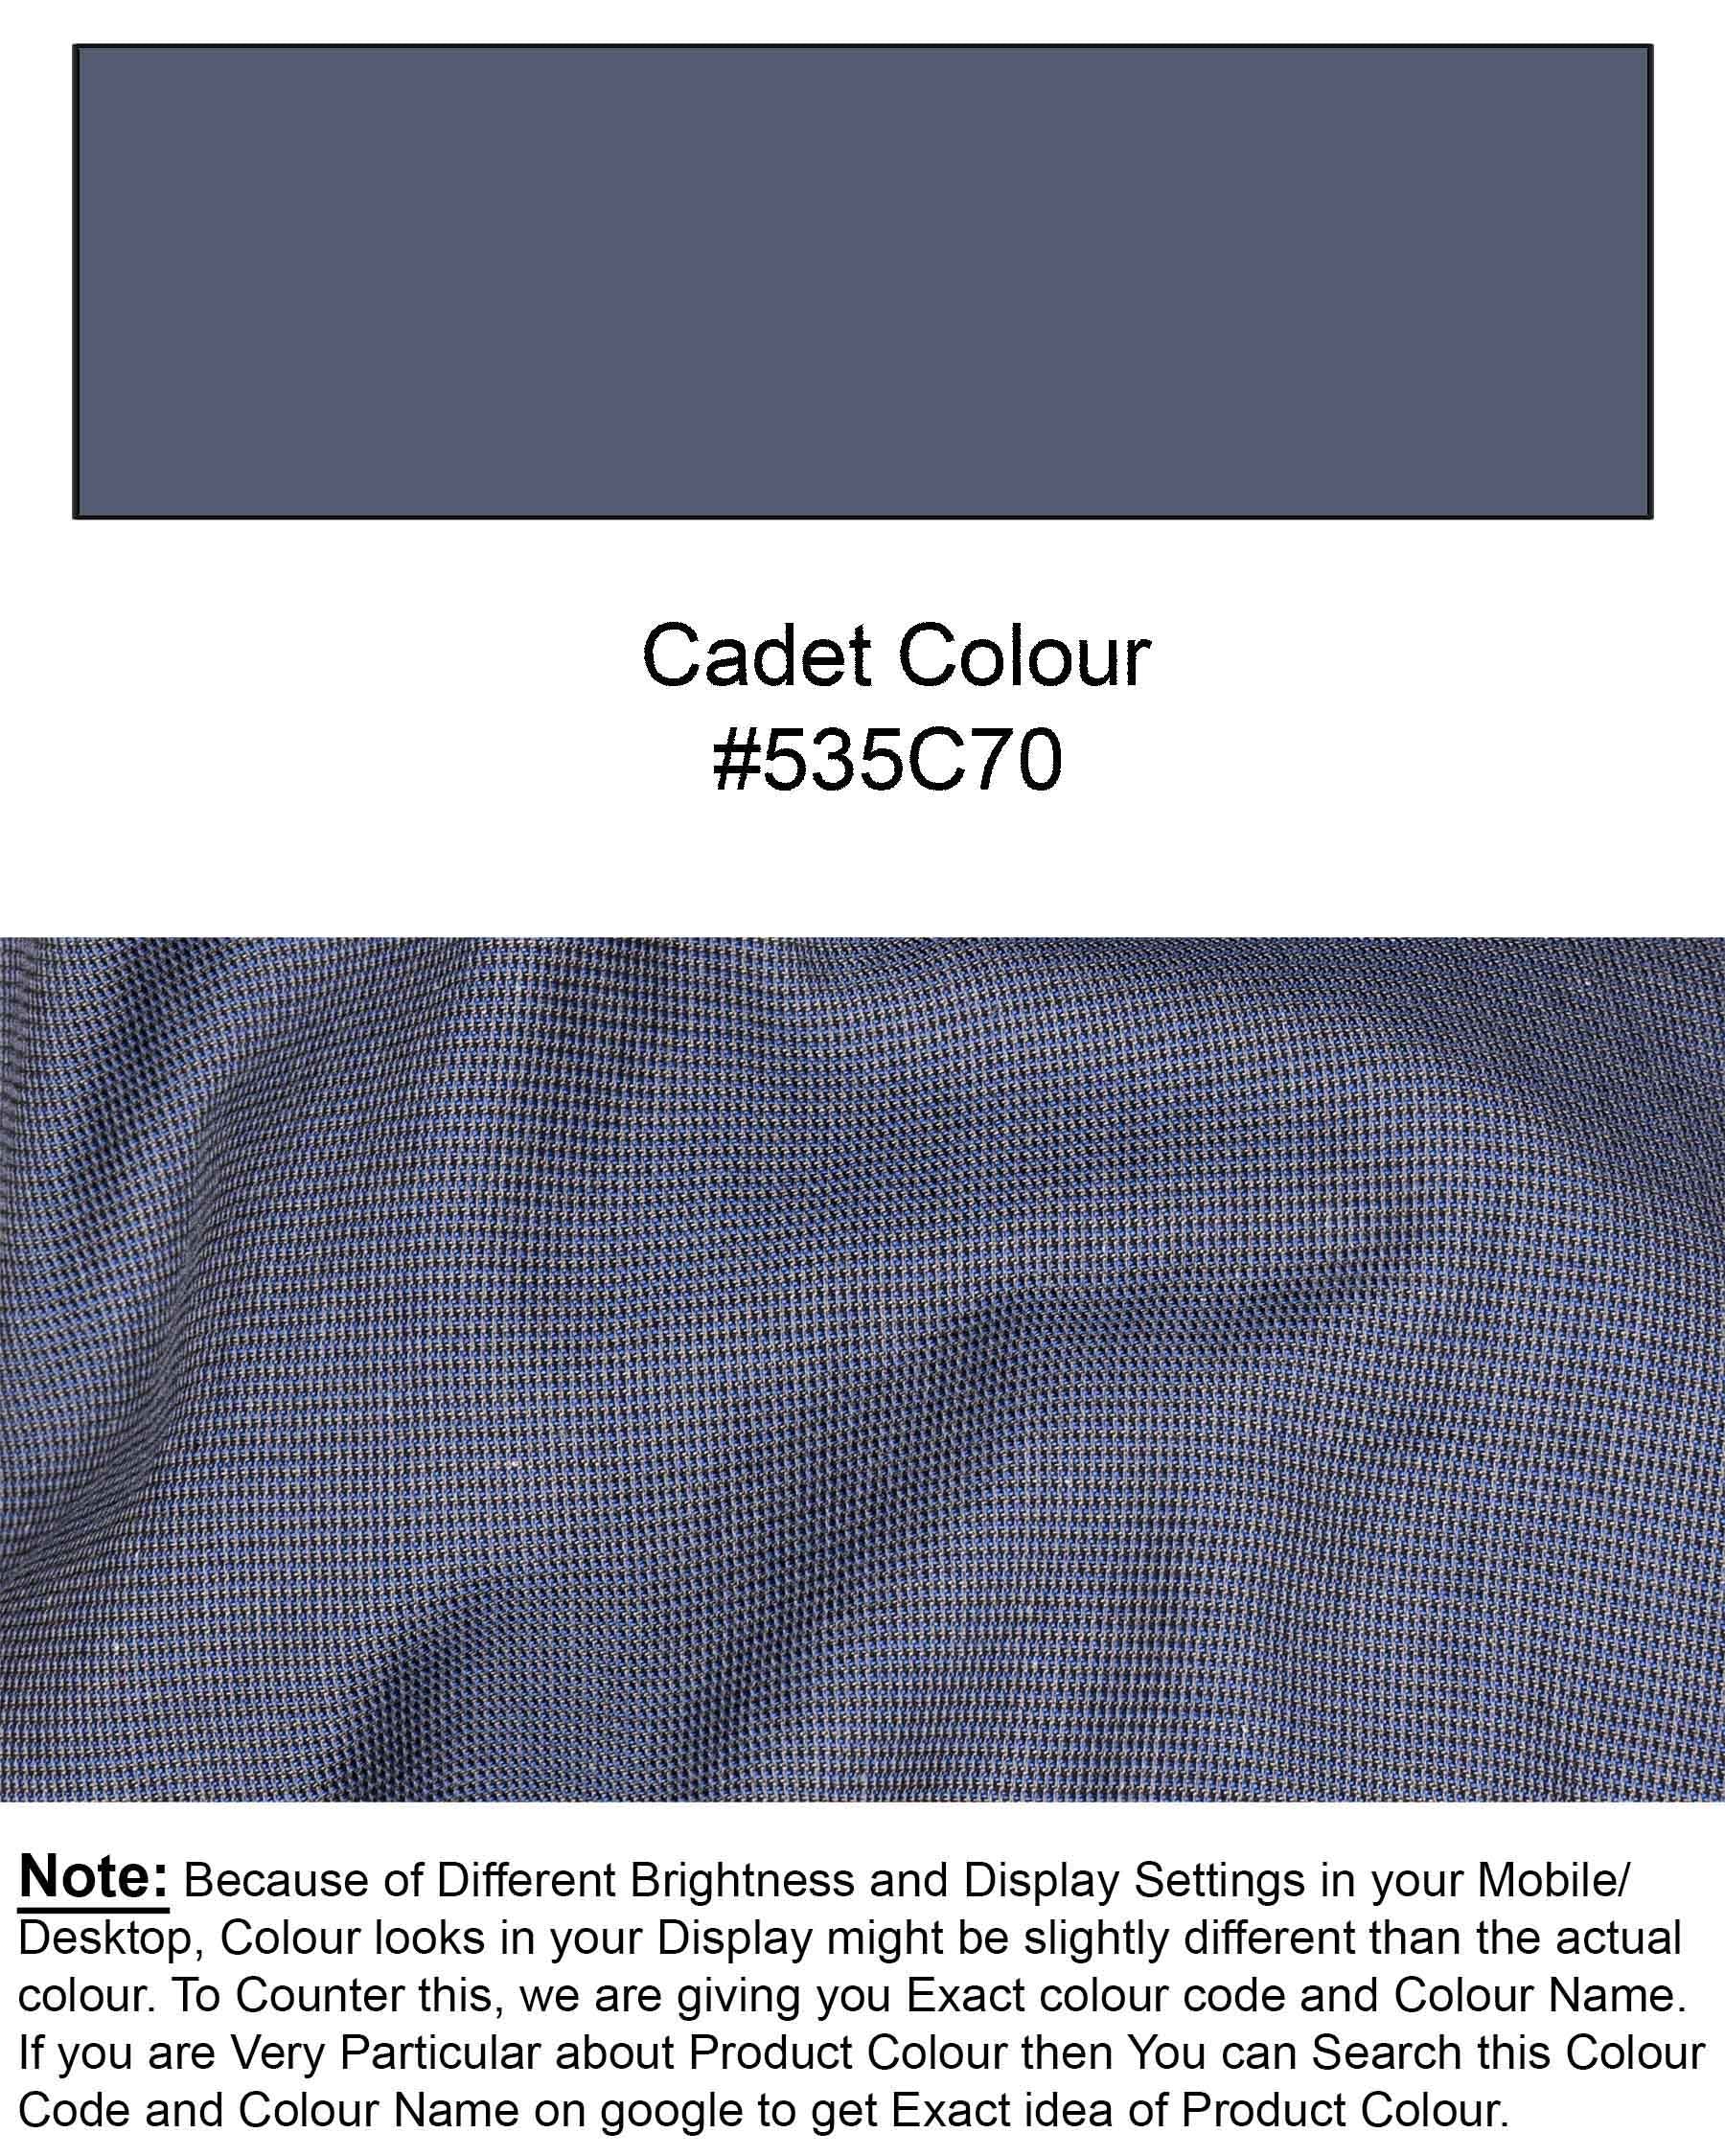 Cadet Blue Micro Houndstooth Textured Premium Giza Cotton Shirt  6474-CA-38, 6474-CA-H-38, 6474-CA-39, 6474-CA-H-39, 6474-CA-40, 6474-CA-H-40, 6474-CA-42, 6474-CA-H-42, 6474-CA-44, 6474-CA-H-44, 6474-CA-46, 6474-CA-H-46, 6474-CA-48, 6474-CA-H-48, 6474-CA-50, 6474-CA-H-50, 6474-CA-52, 6474-CA-H-52